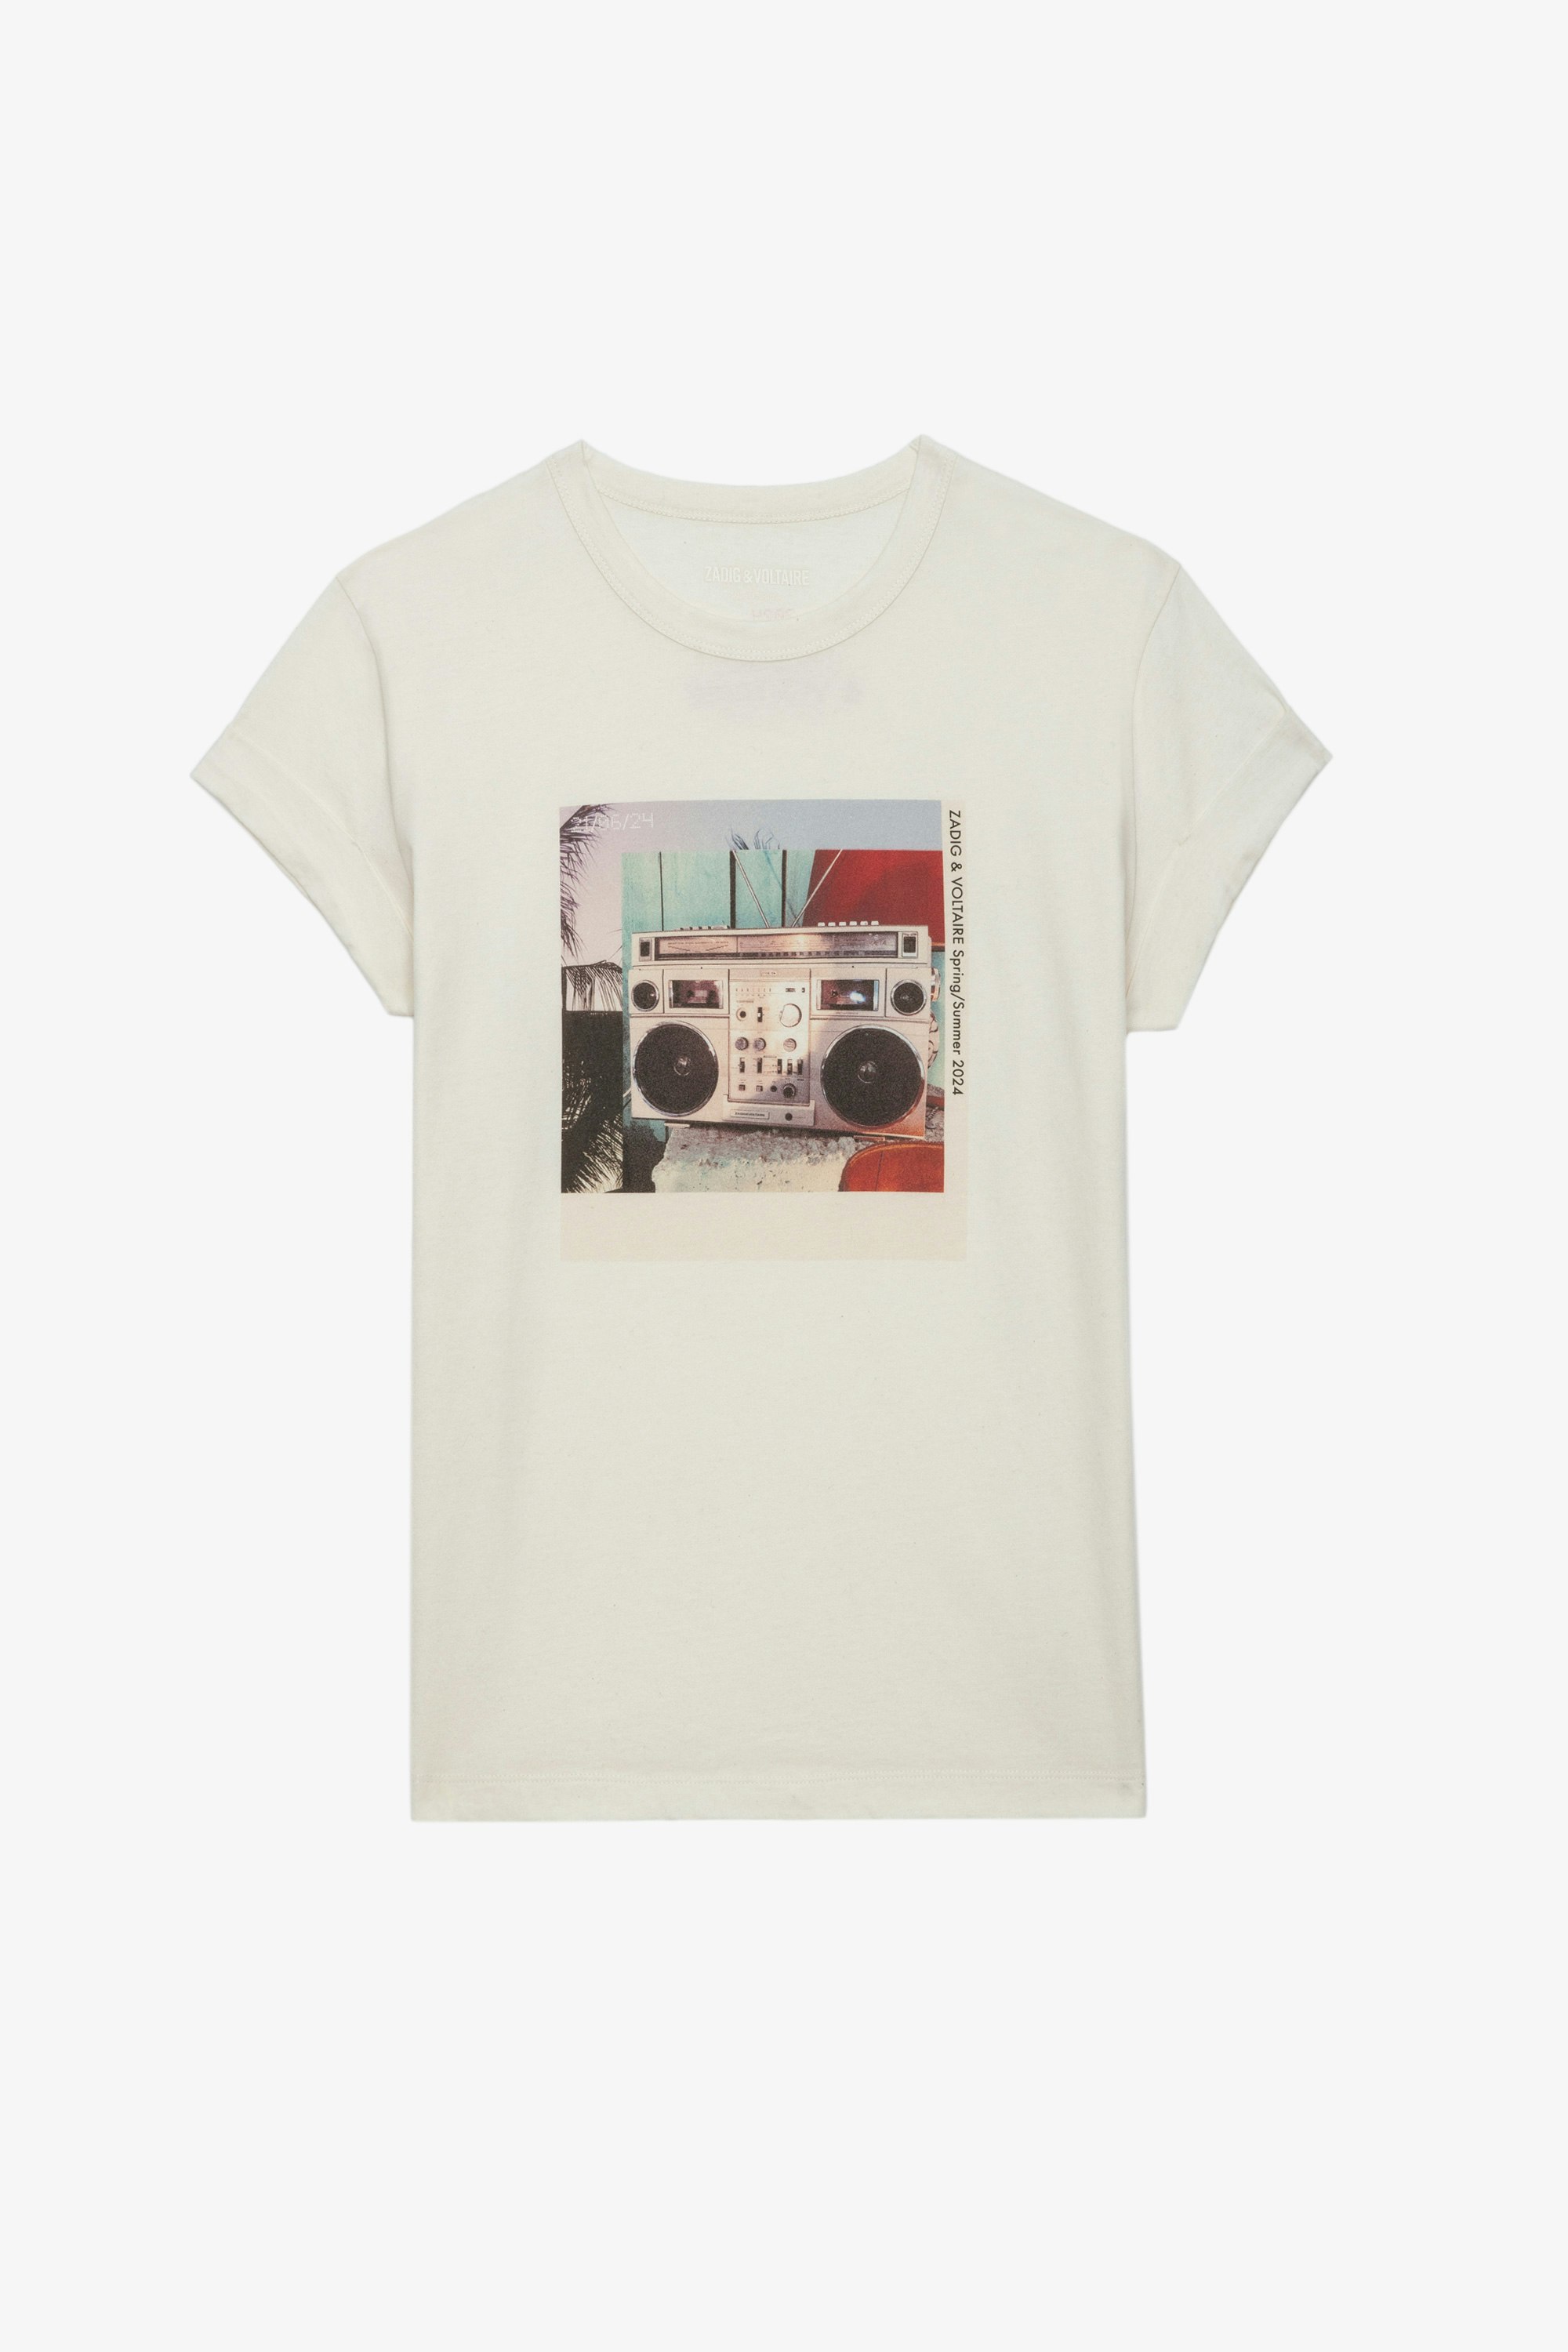 Anya Photoprint T-shirt - White cotton short-sleeved T-shirt with Ghetto Blaster photoprint.